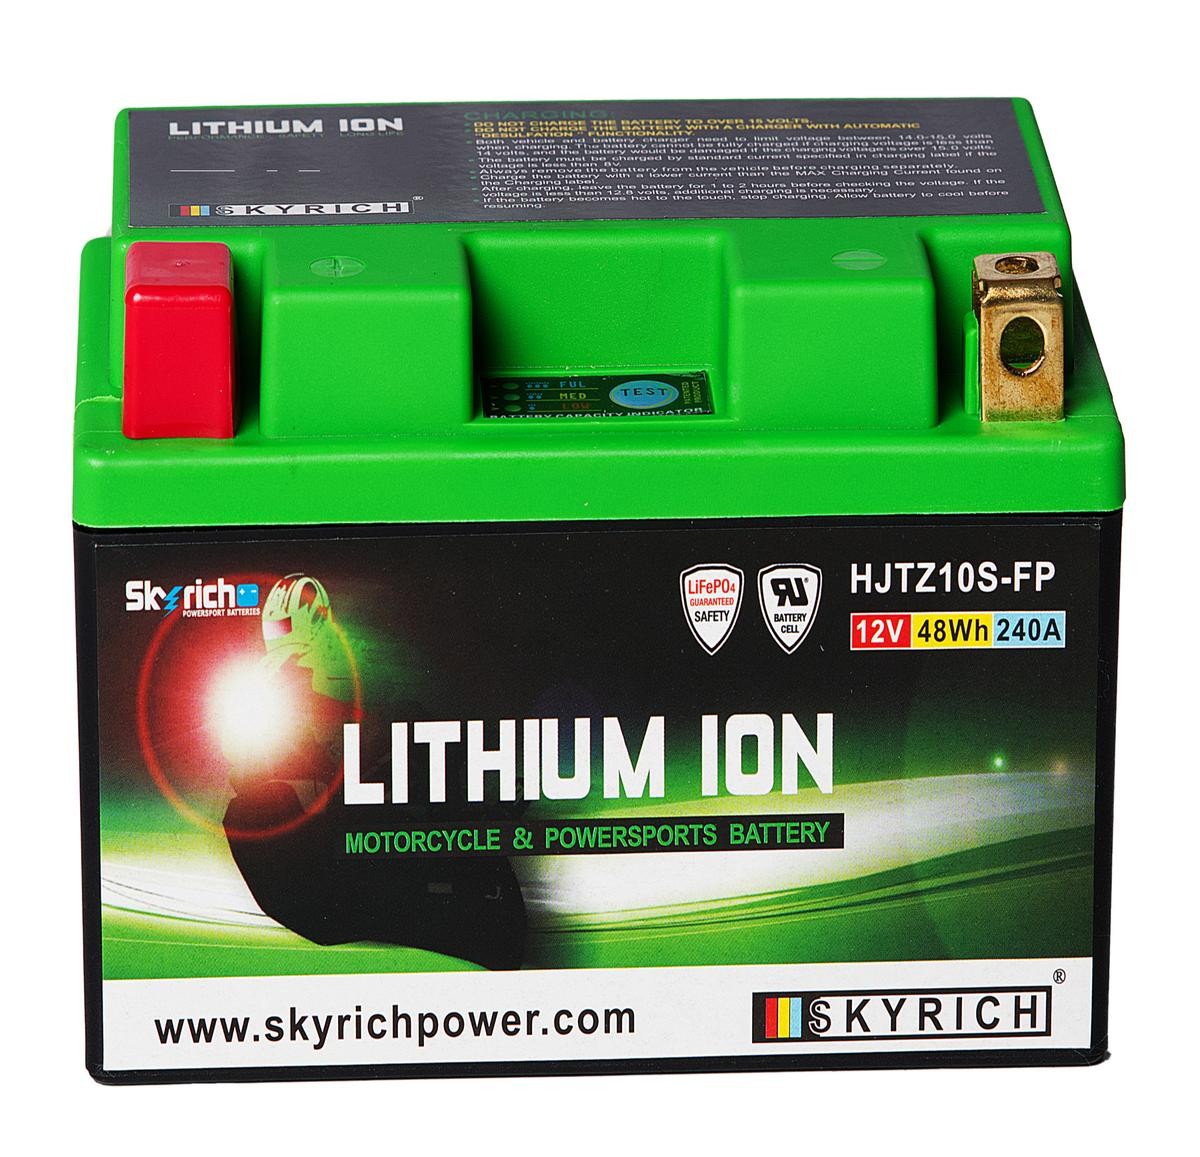 SKYRICH LITHIUM ION 12V 4Ah 240A N Li-Ion Battery Cold-test Current, EN: 240A, Voltage: 12V, Terminal Placement: 1 Starter battery HJTZ10S-FP buy